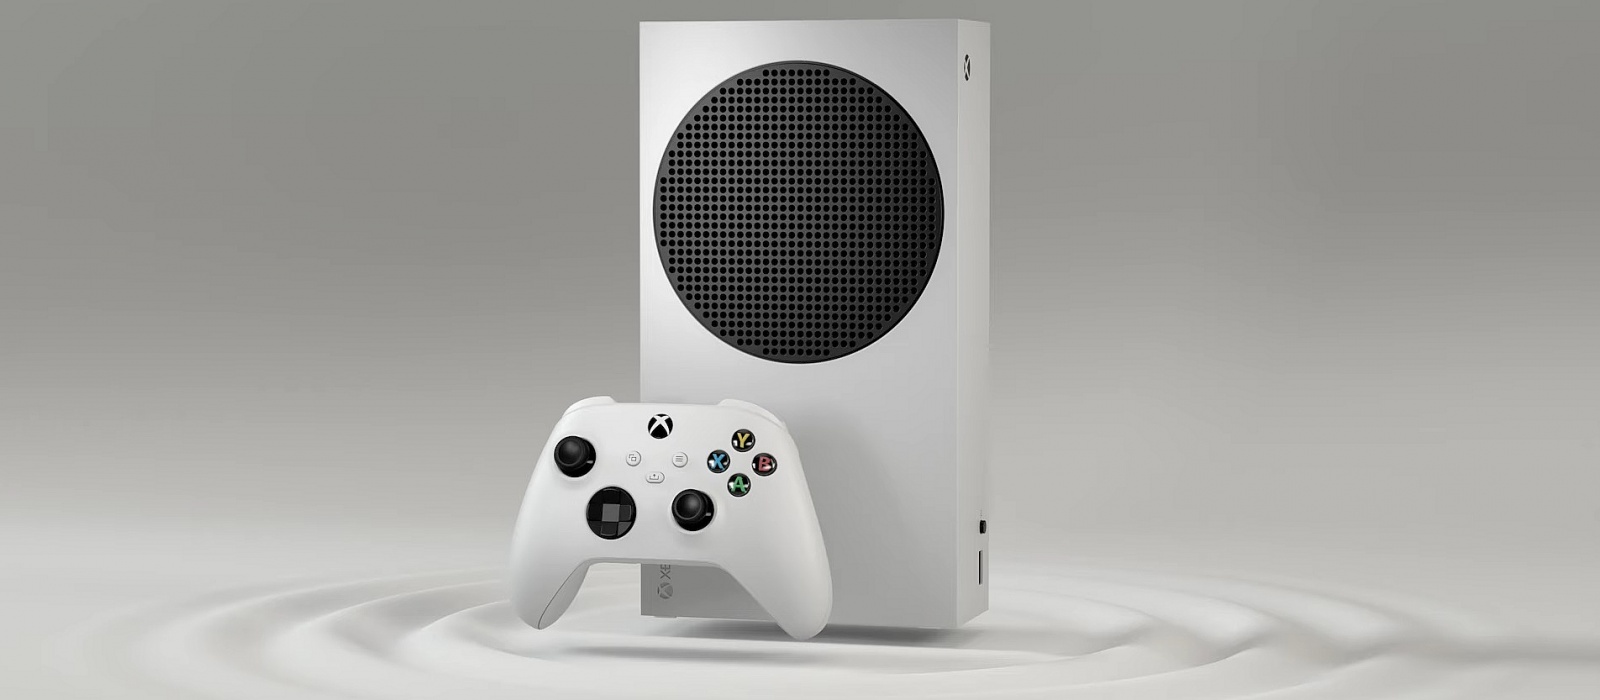 Xbox Series S весит меньше PS4 Slim. Microsoft открыла страницы новых консолей с характеристиками